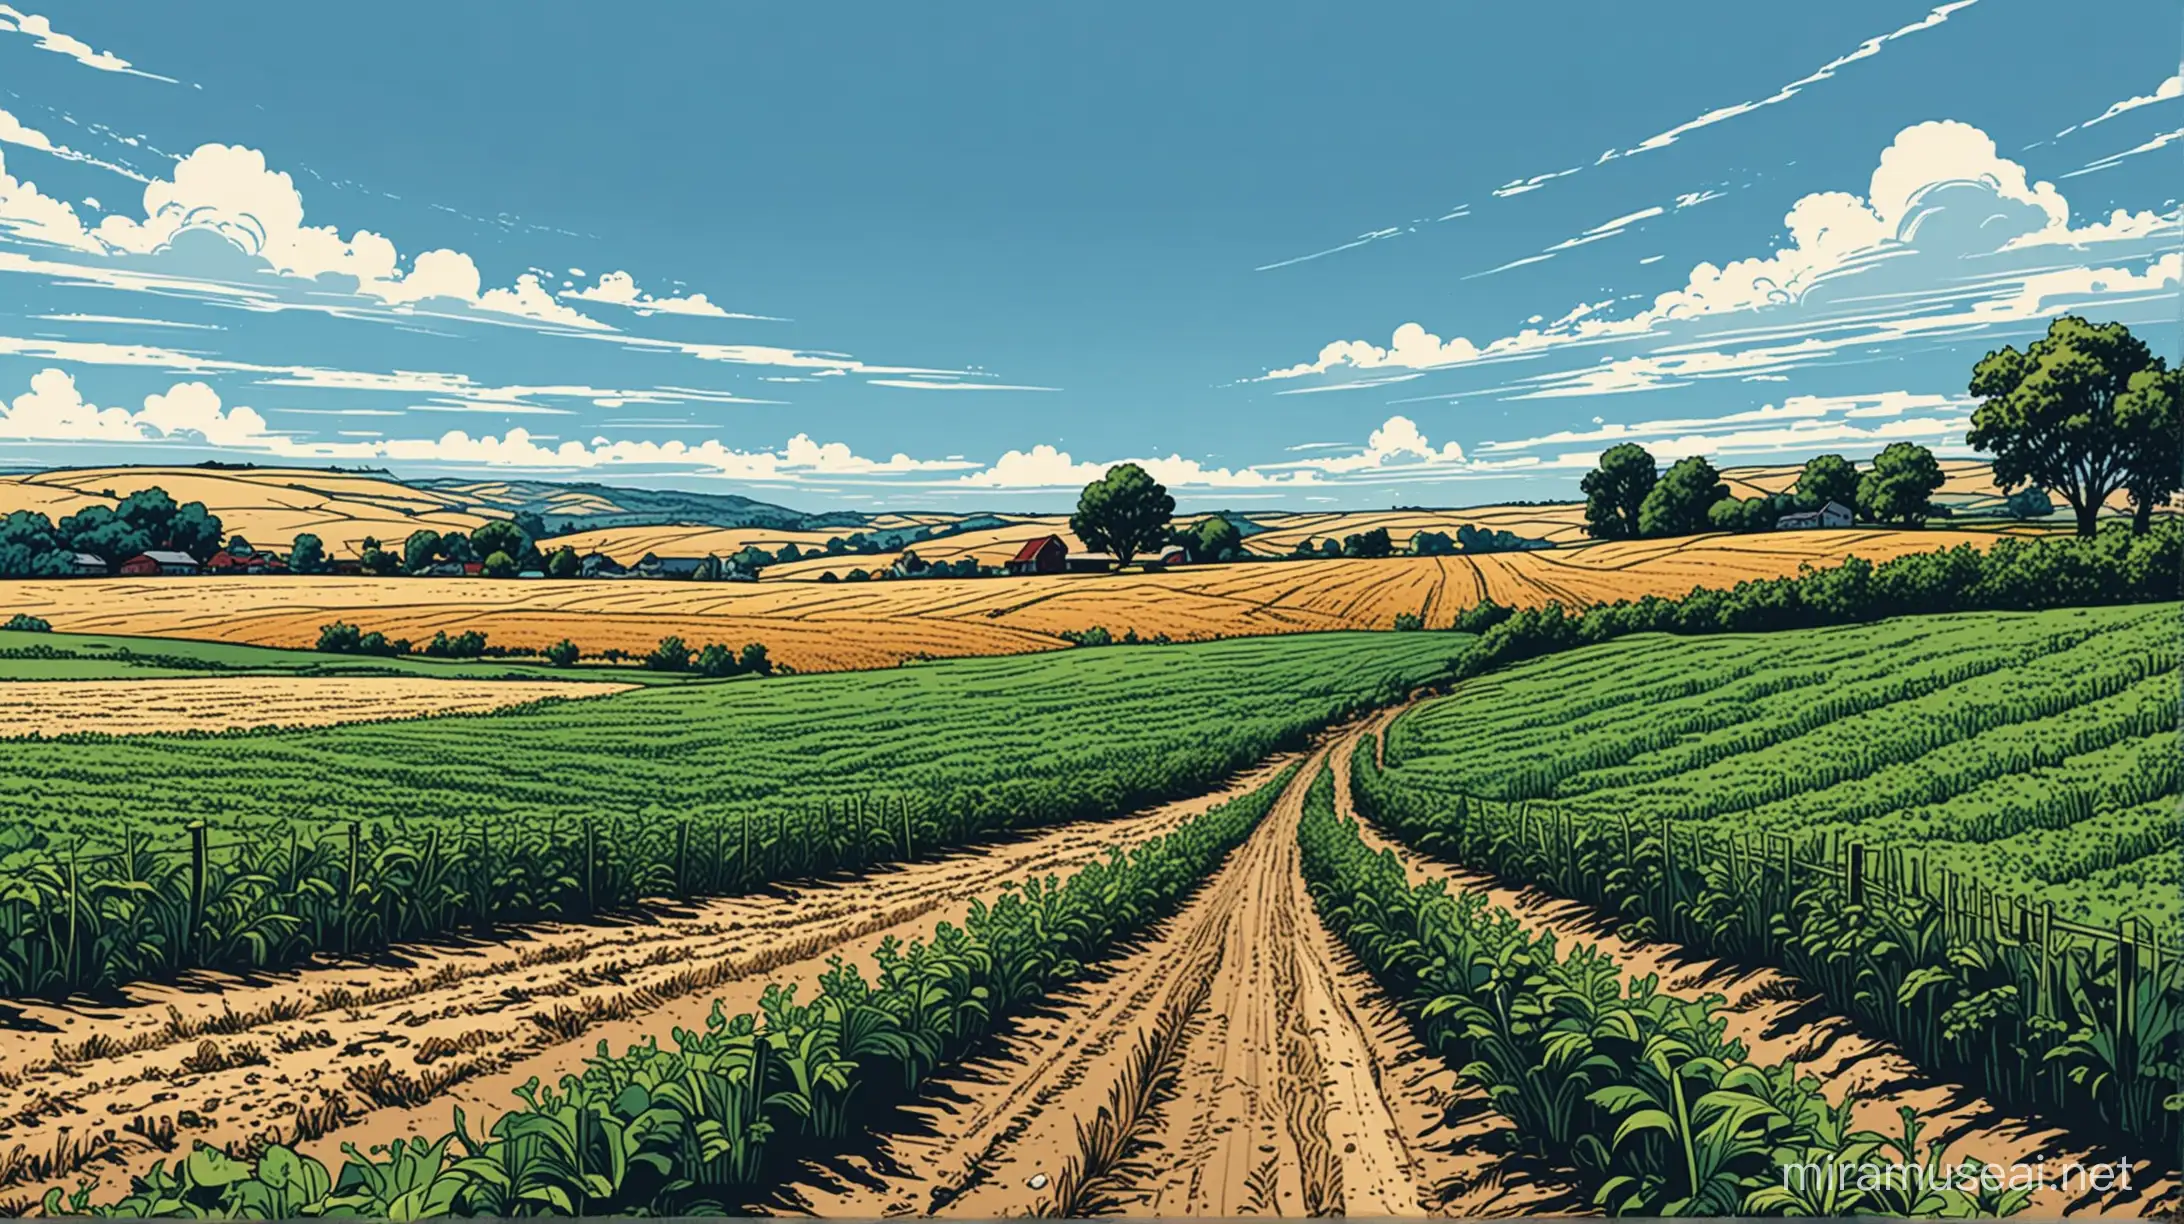 Scenic Farmland Under Clear Blue Skies Comic Book Style Illustration